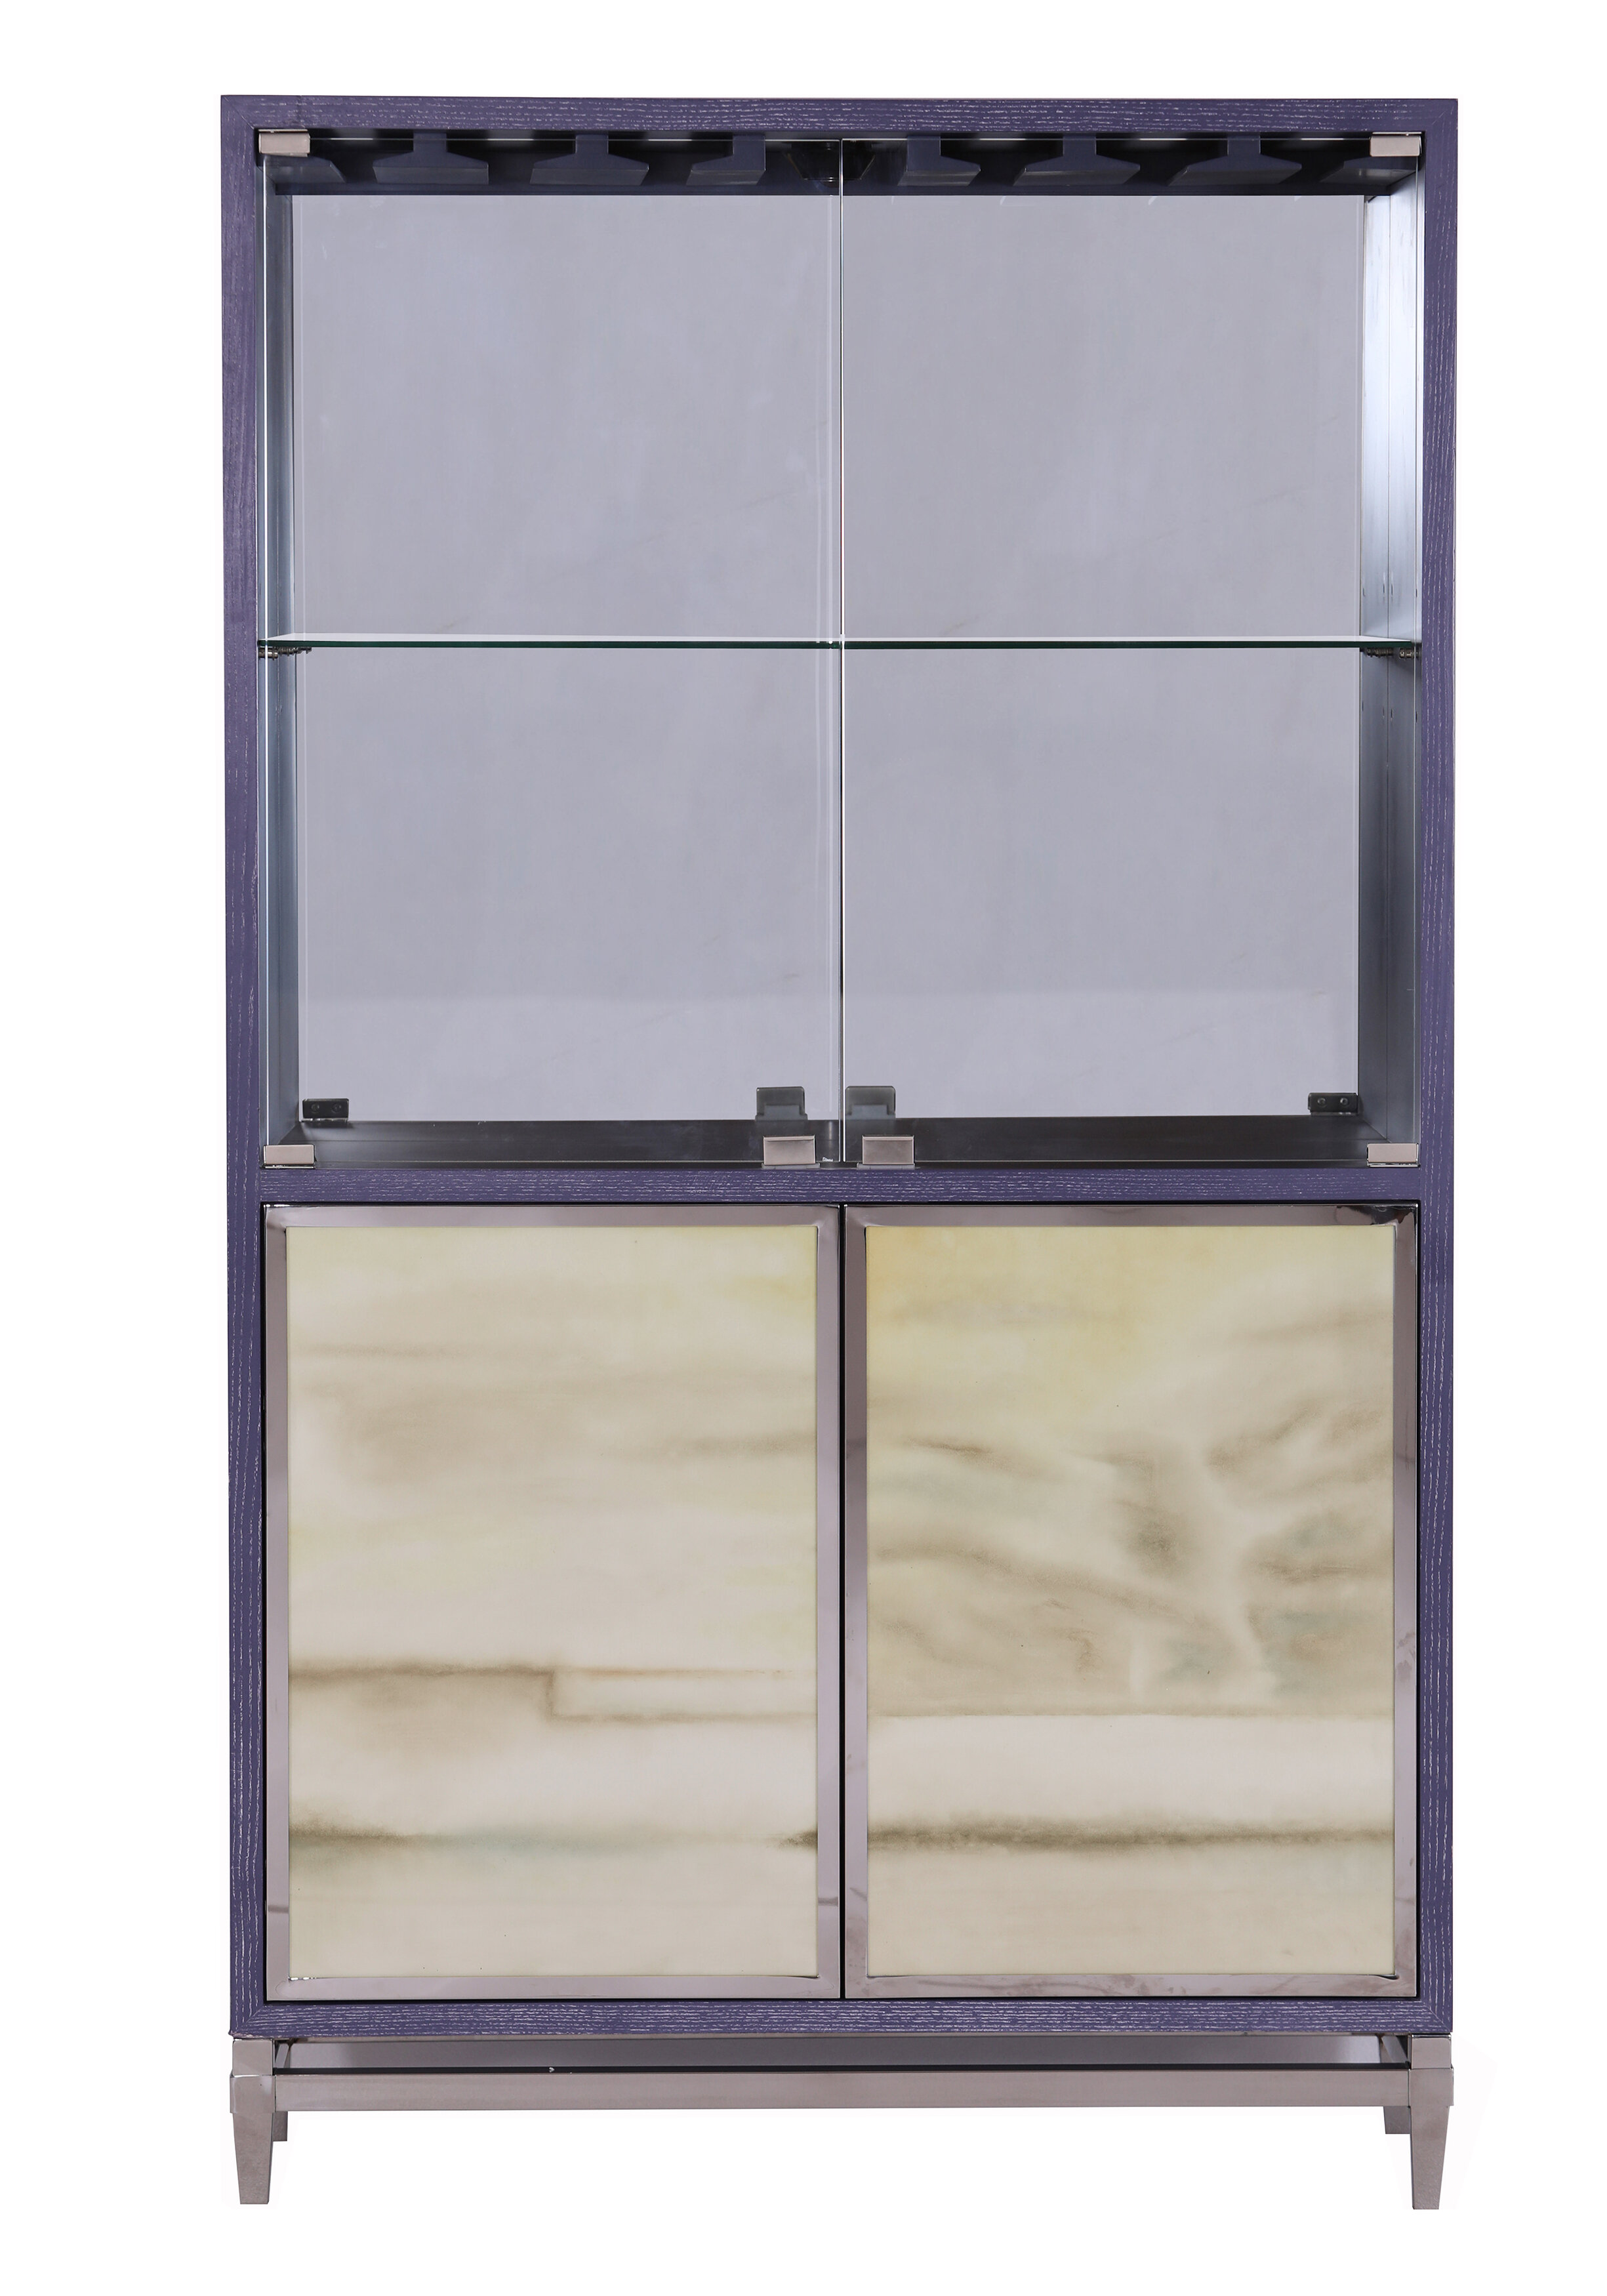 Brayden Studio Renate Mirrored Home Bar Cabinet Reviews